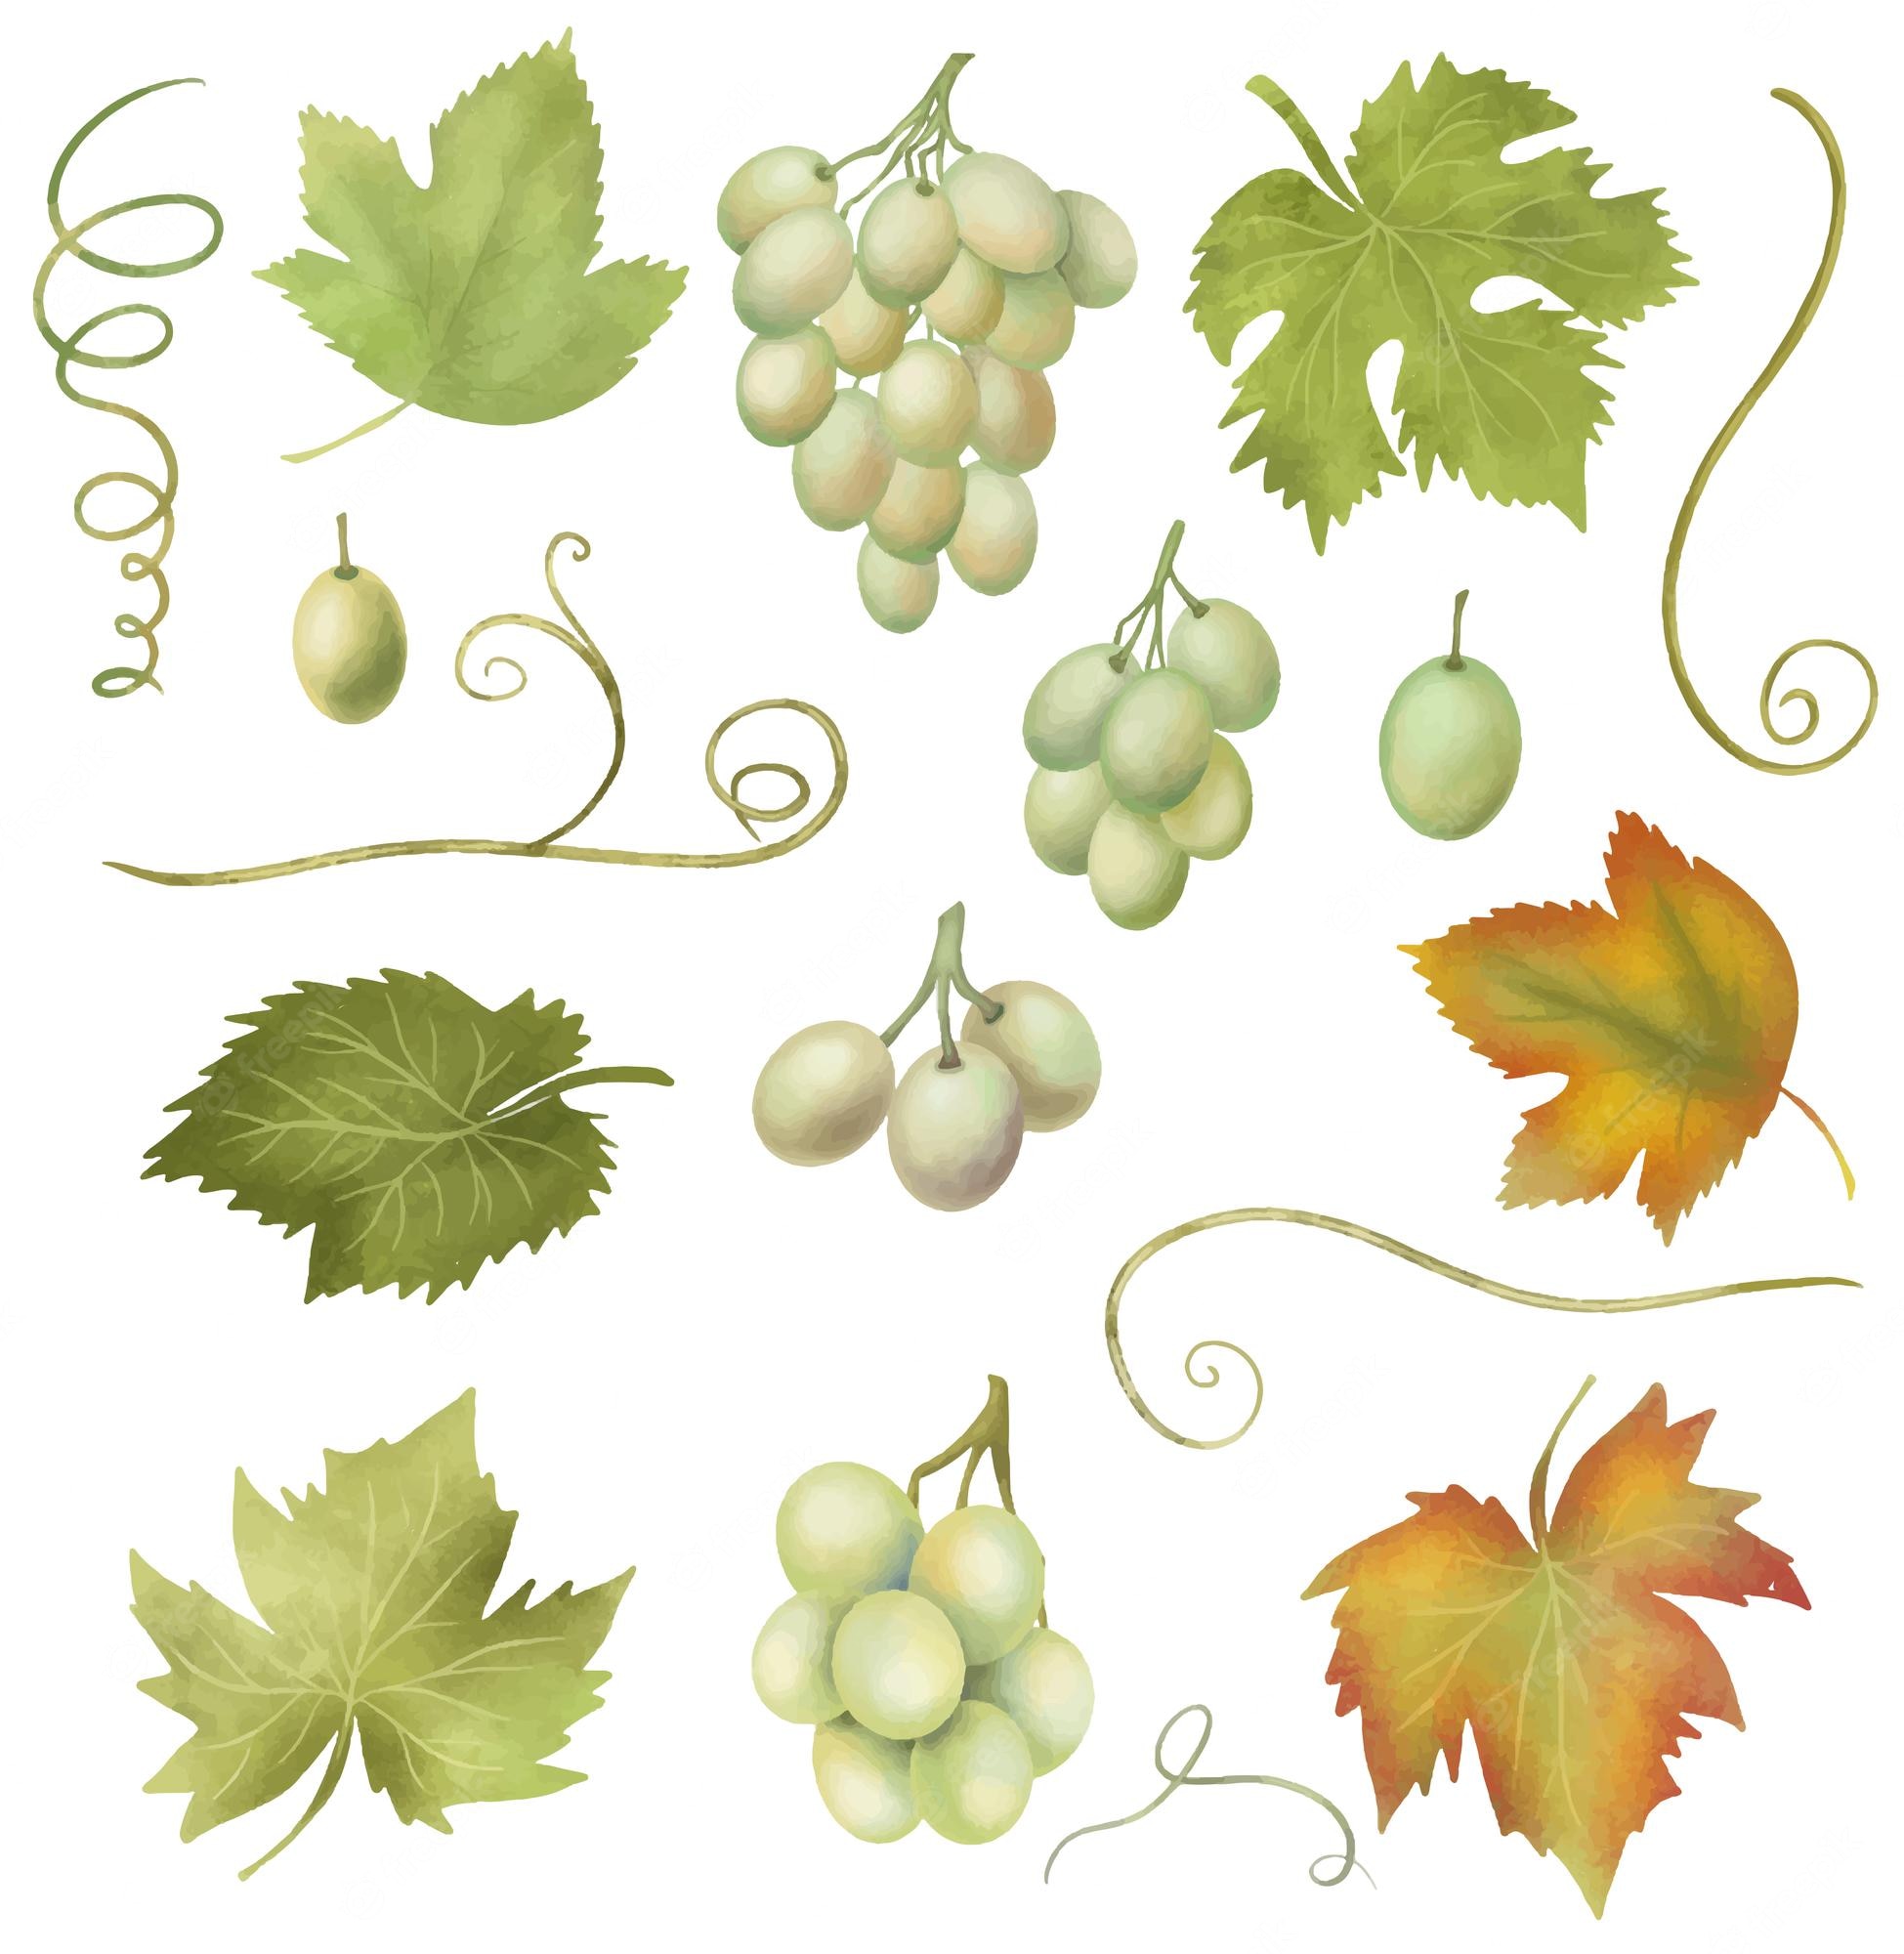 Grape Vine Leaves Clip Art N7 free image download - Clip Art Library